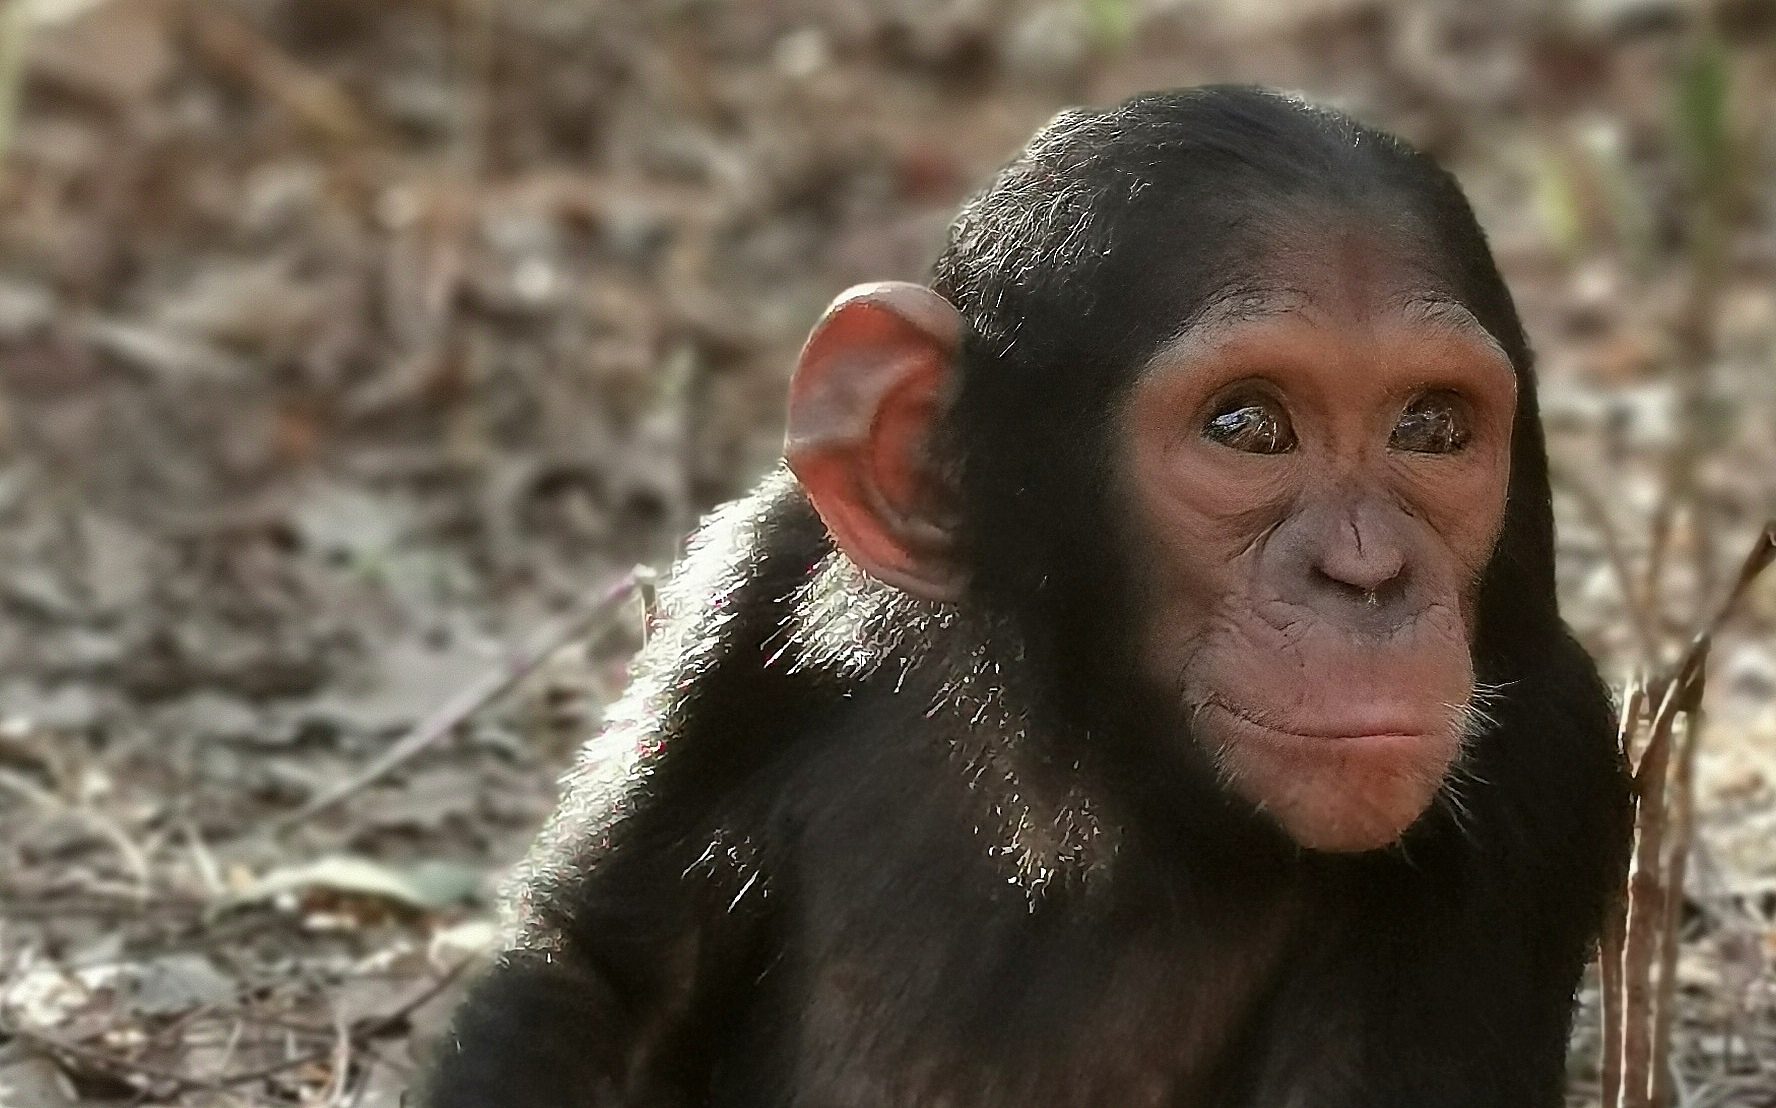 SCT, the Sweden Chimpanzee Trust